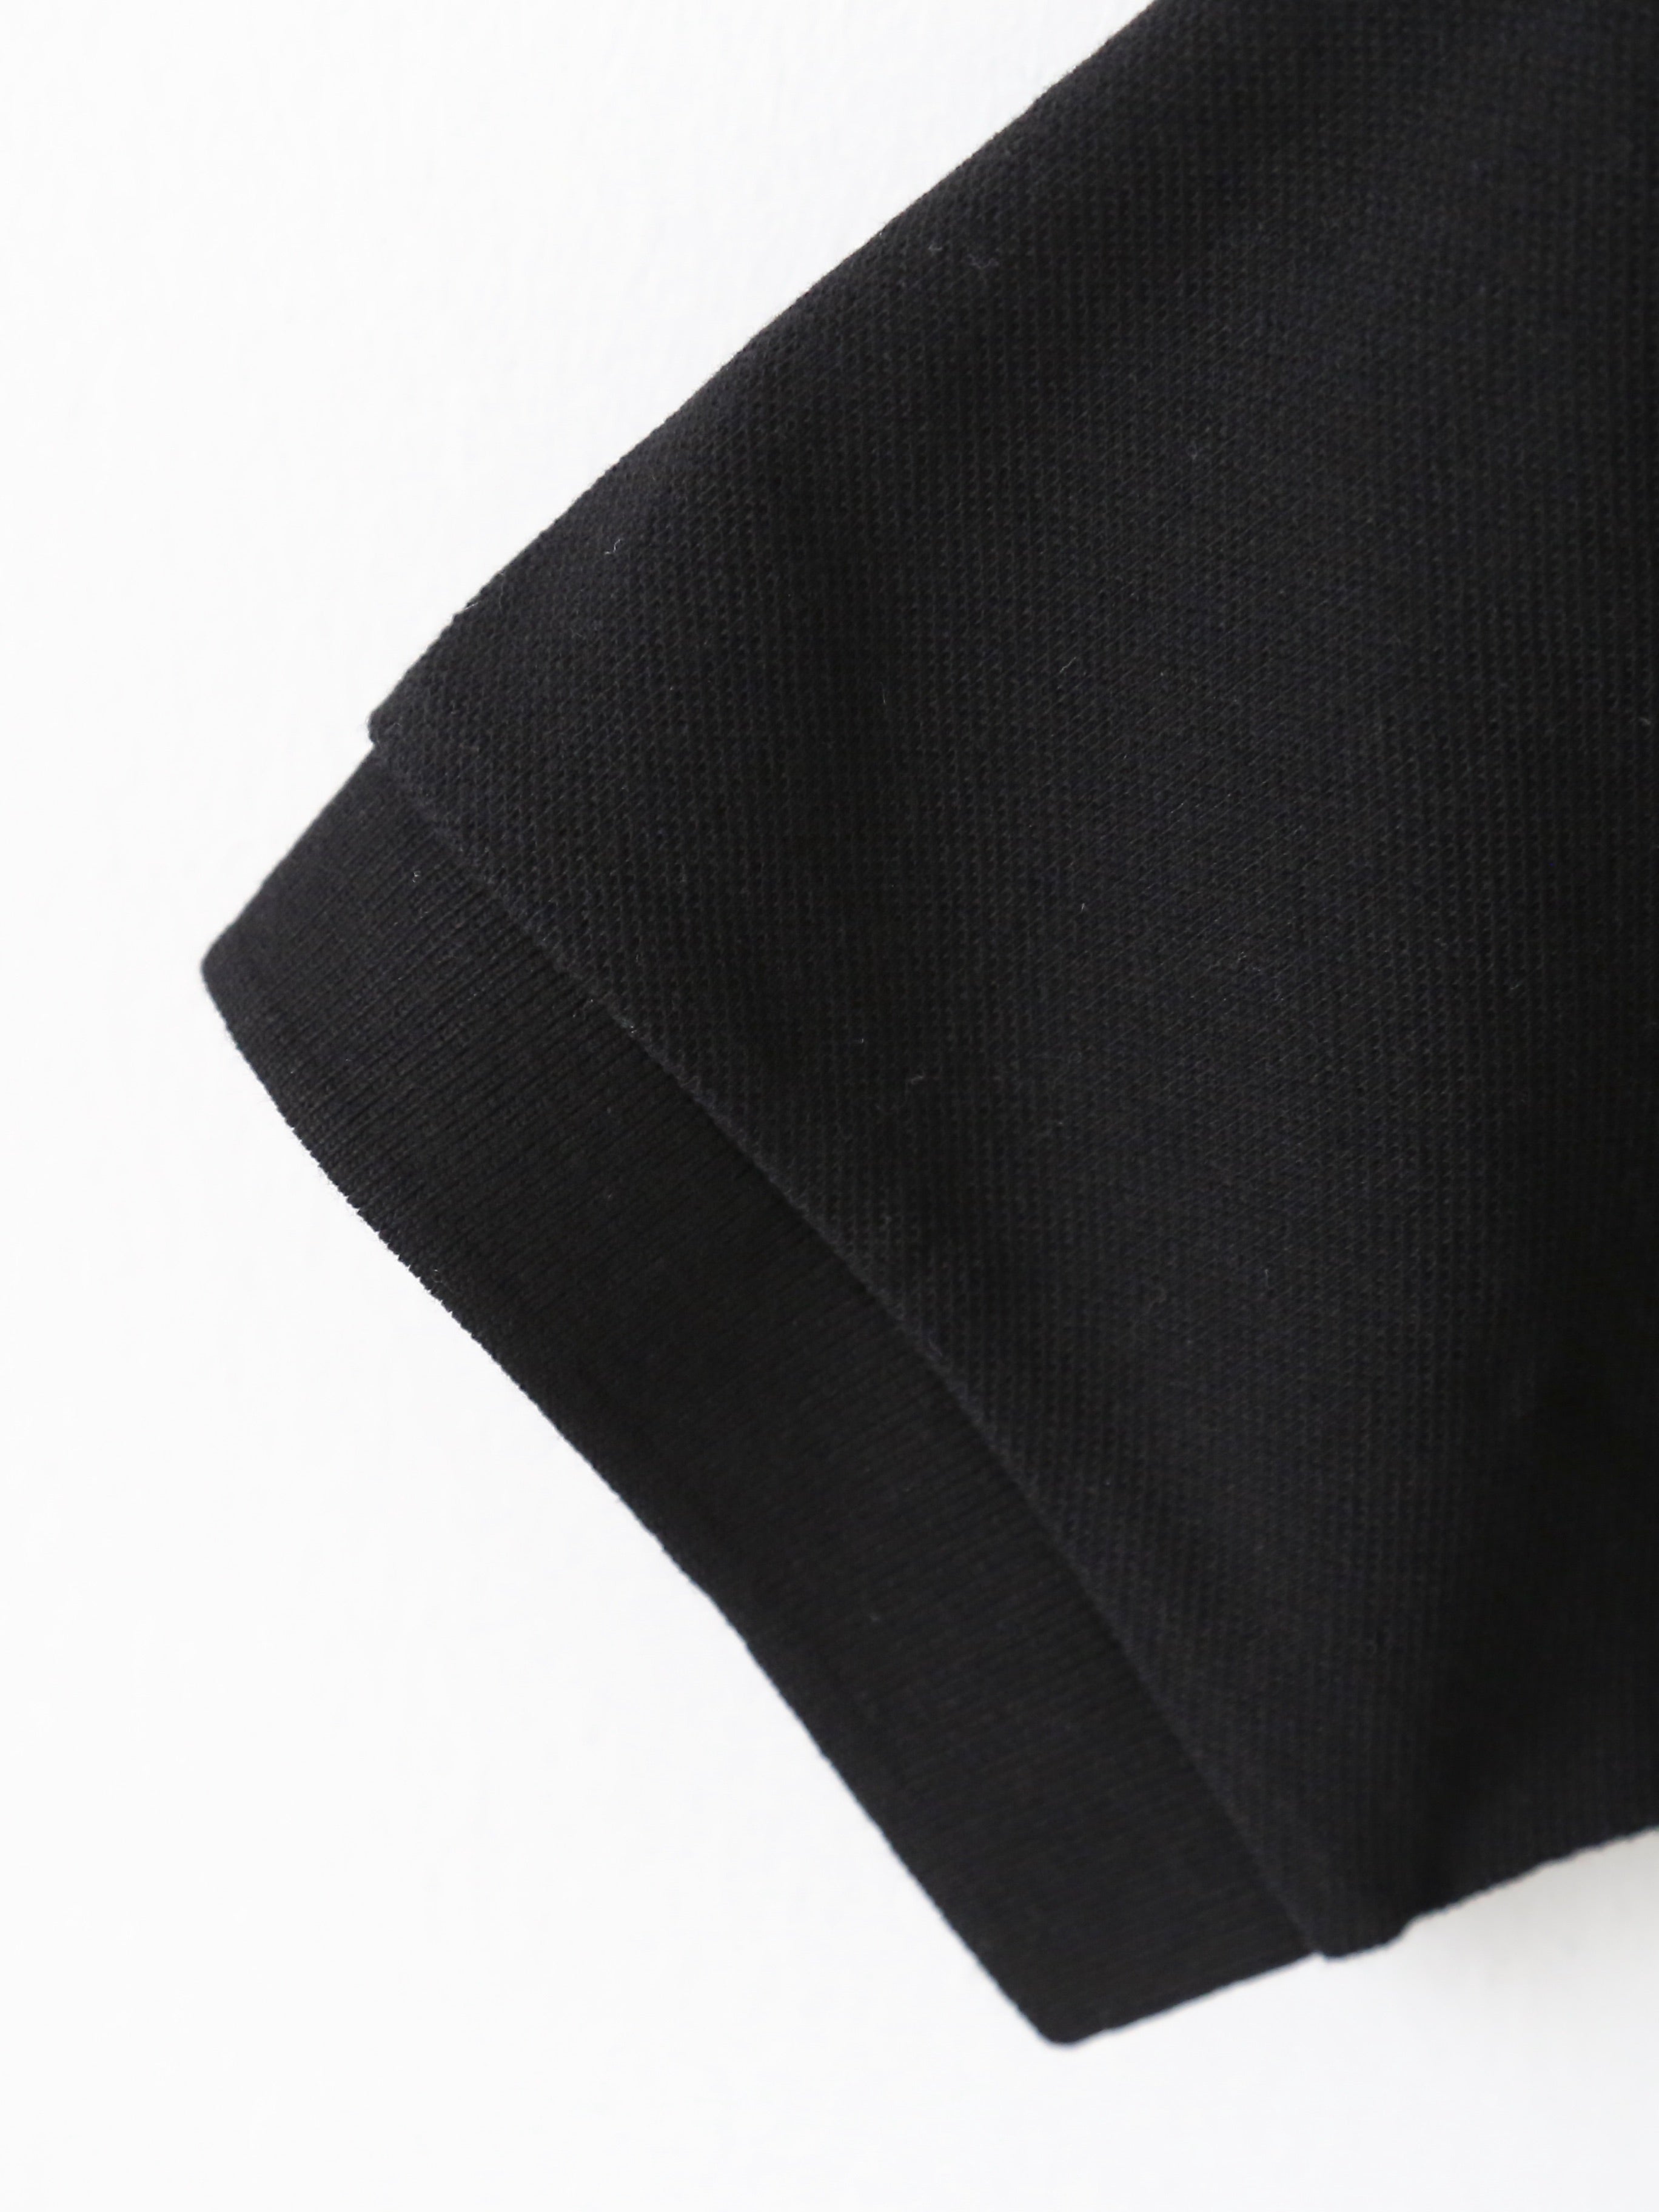 PLAY COMME des GARCONS ポロシャツ(ブラック×ブラック) [AX-T066-051]